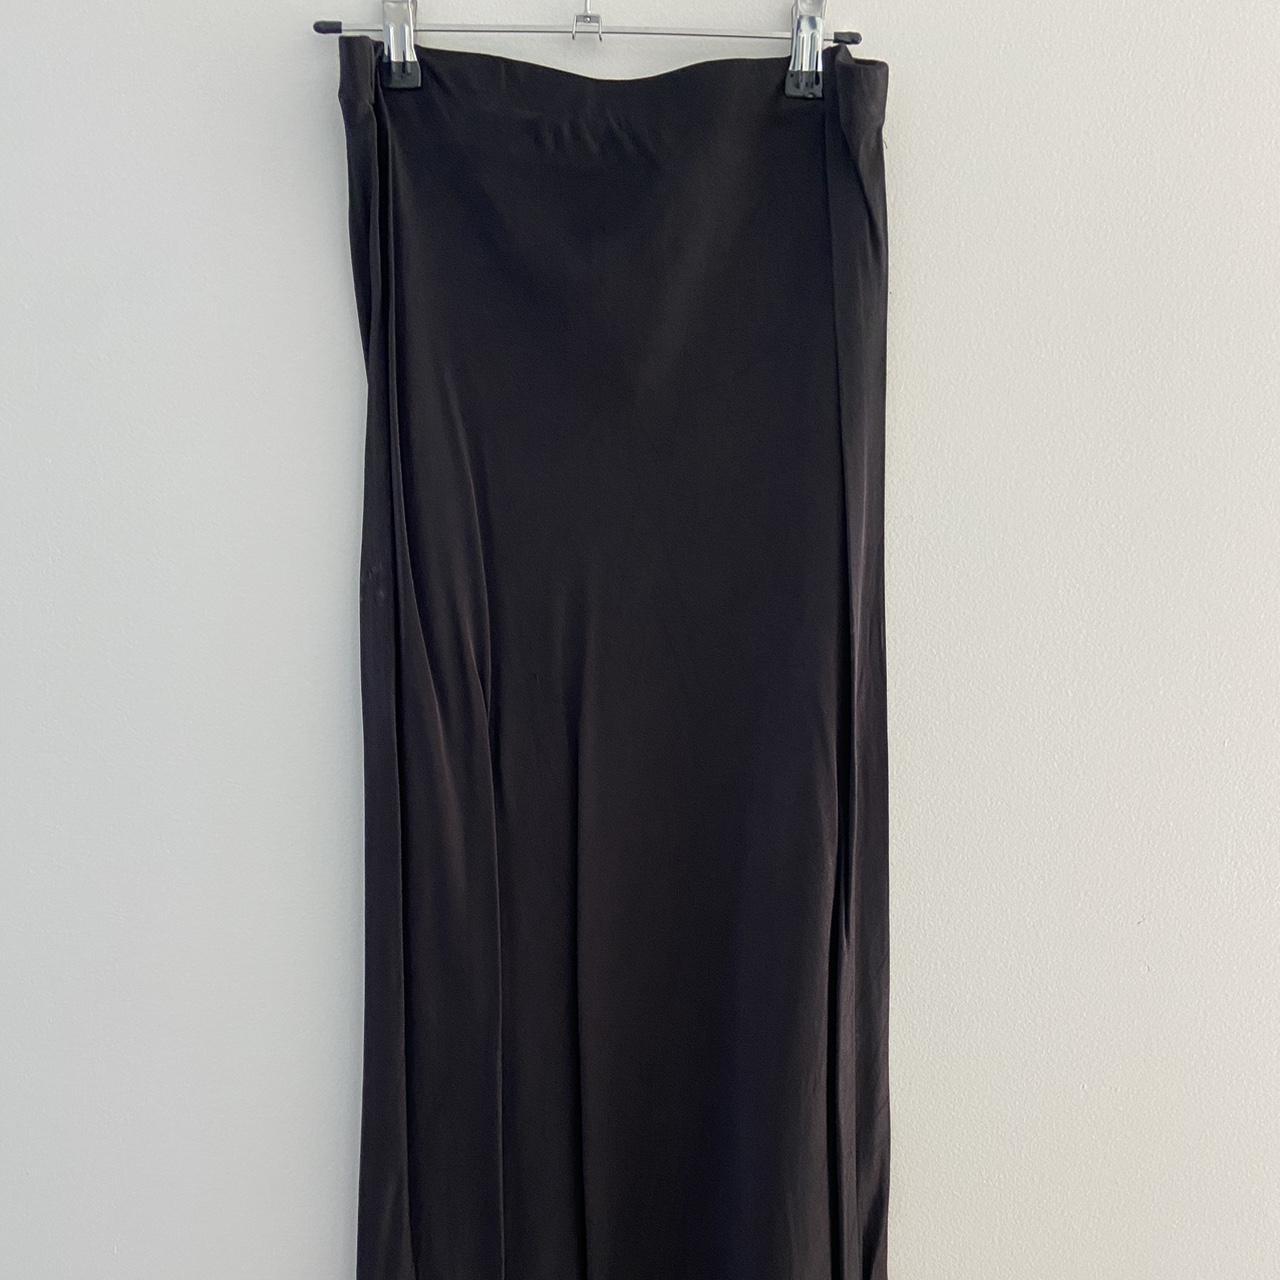 Black satiny slip skirt from Susan. Elastic... - Depop